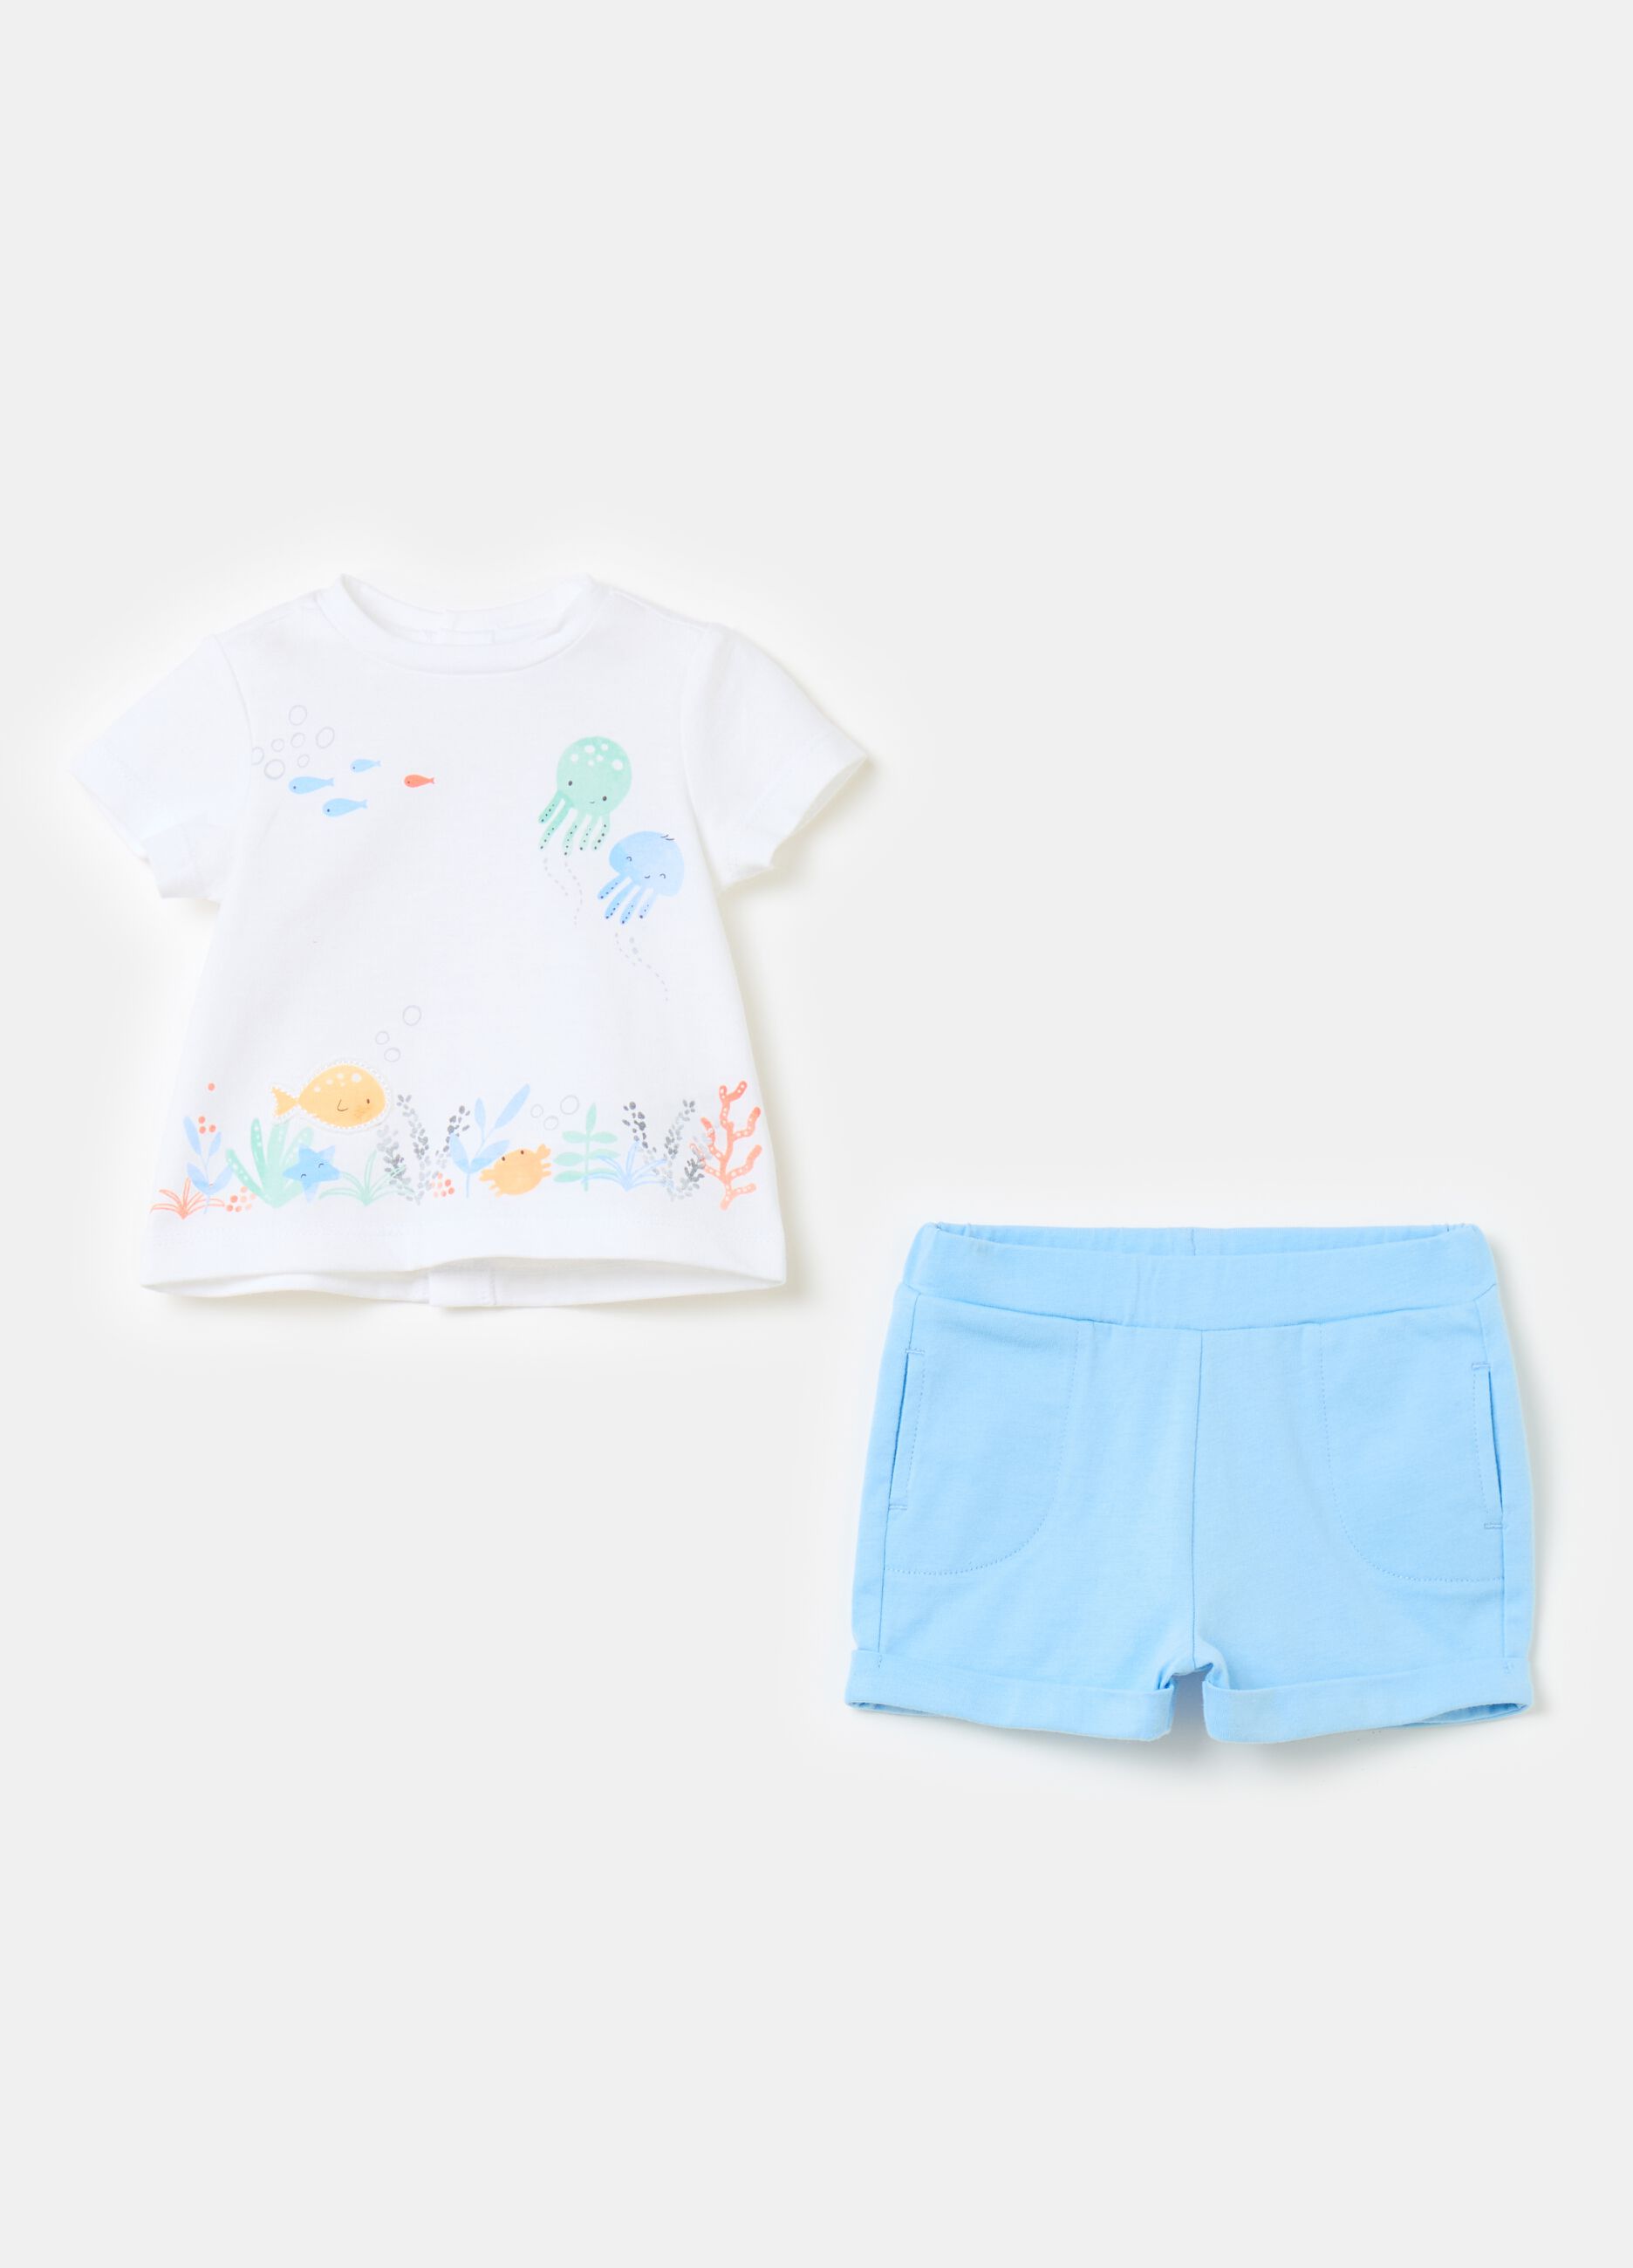 T-shirt and shorts set with sea animals print